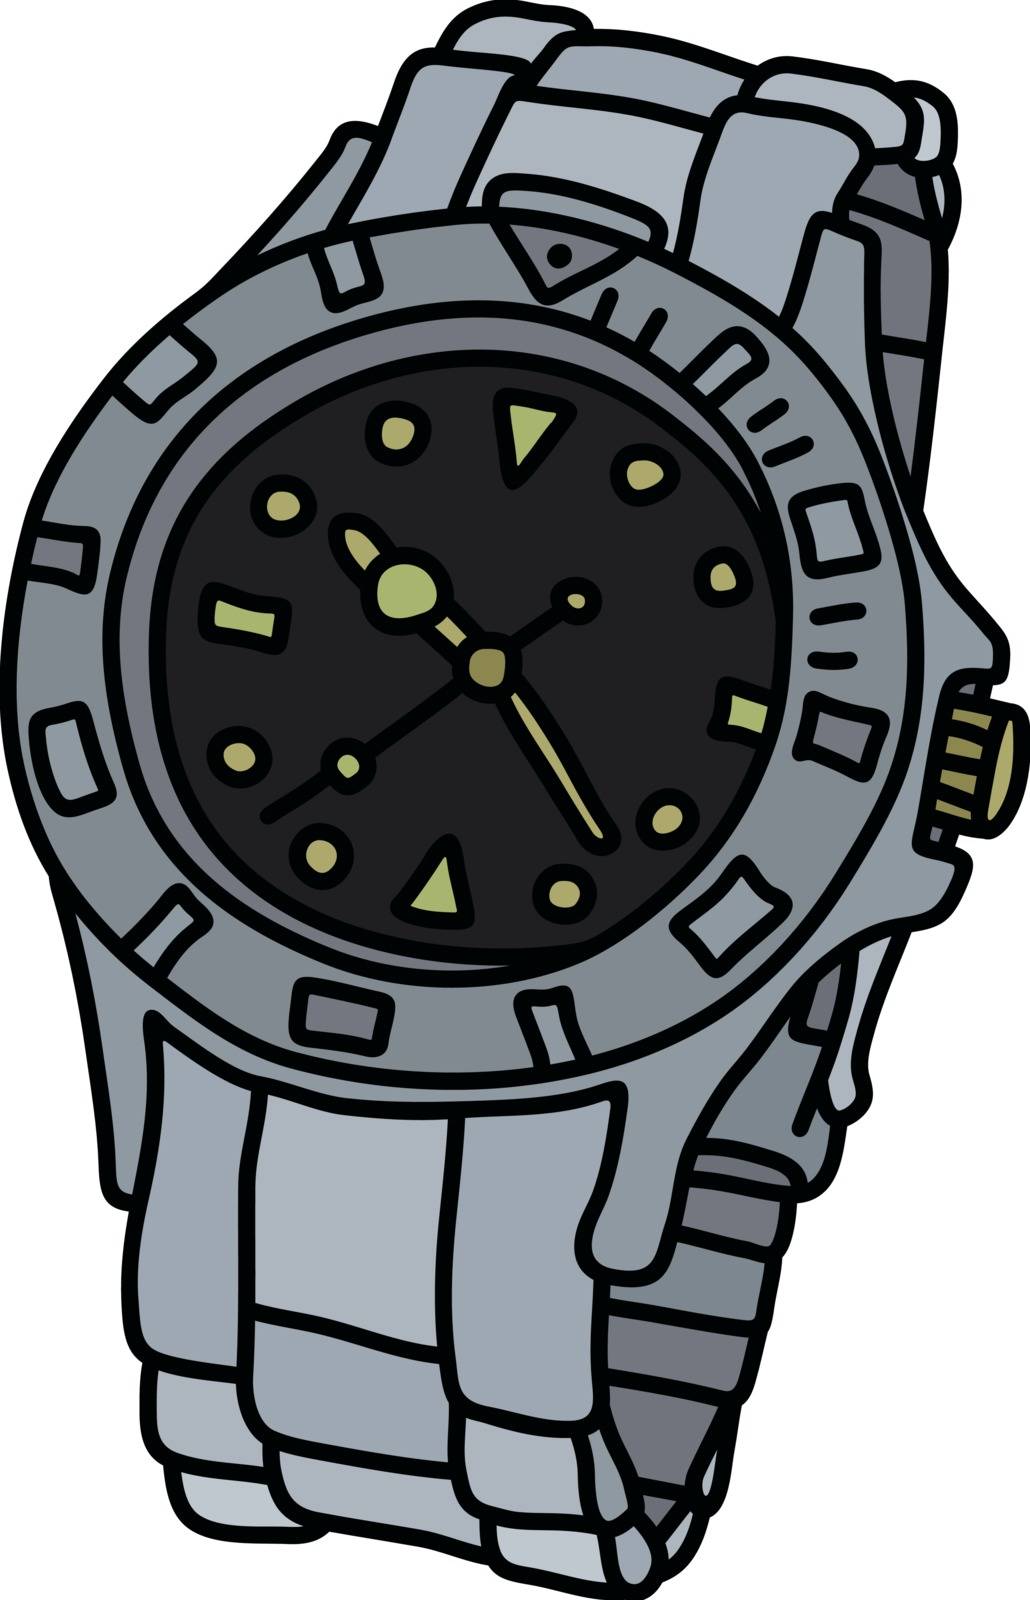 The sports waterproof wristwatch by vostal